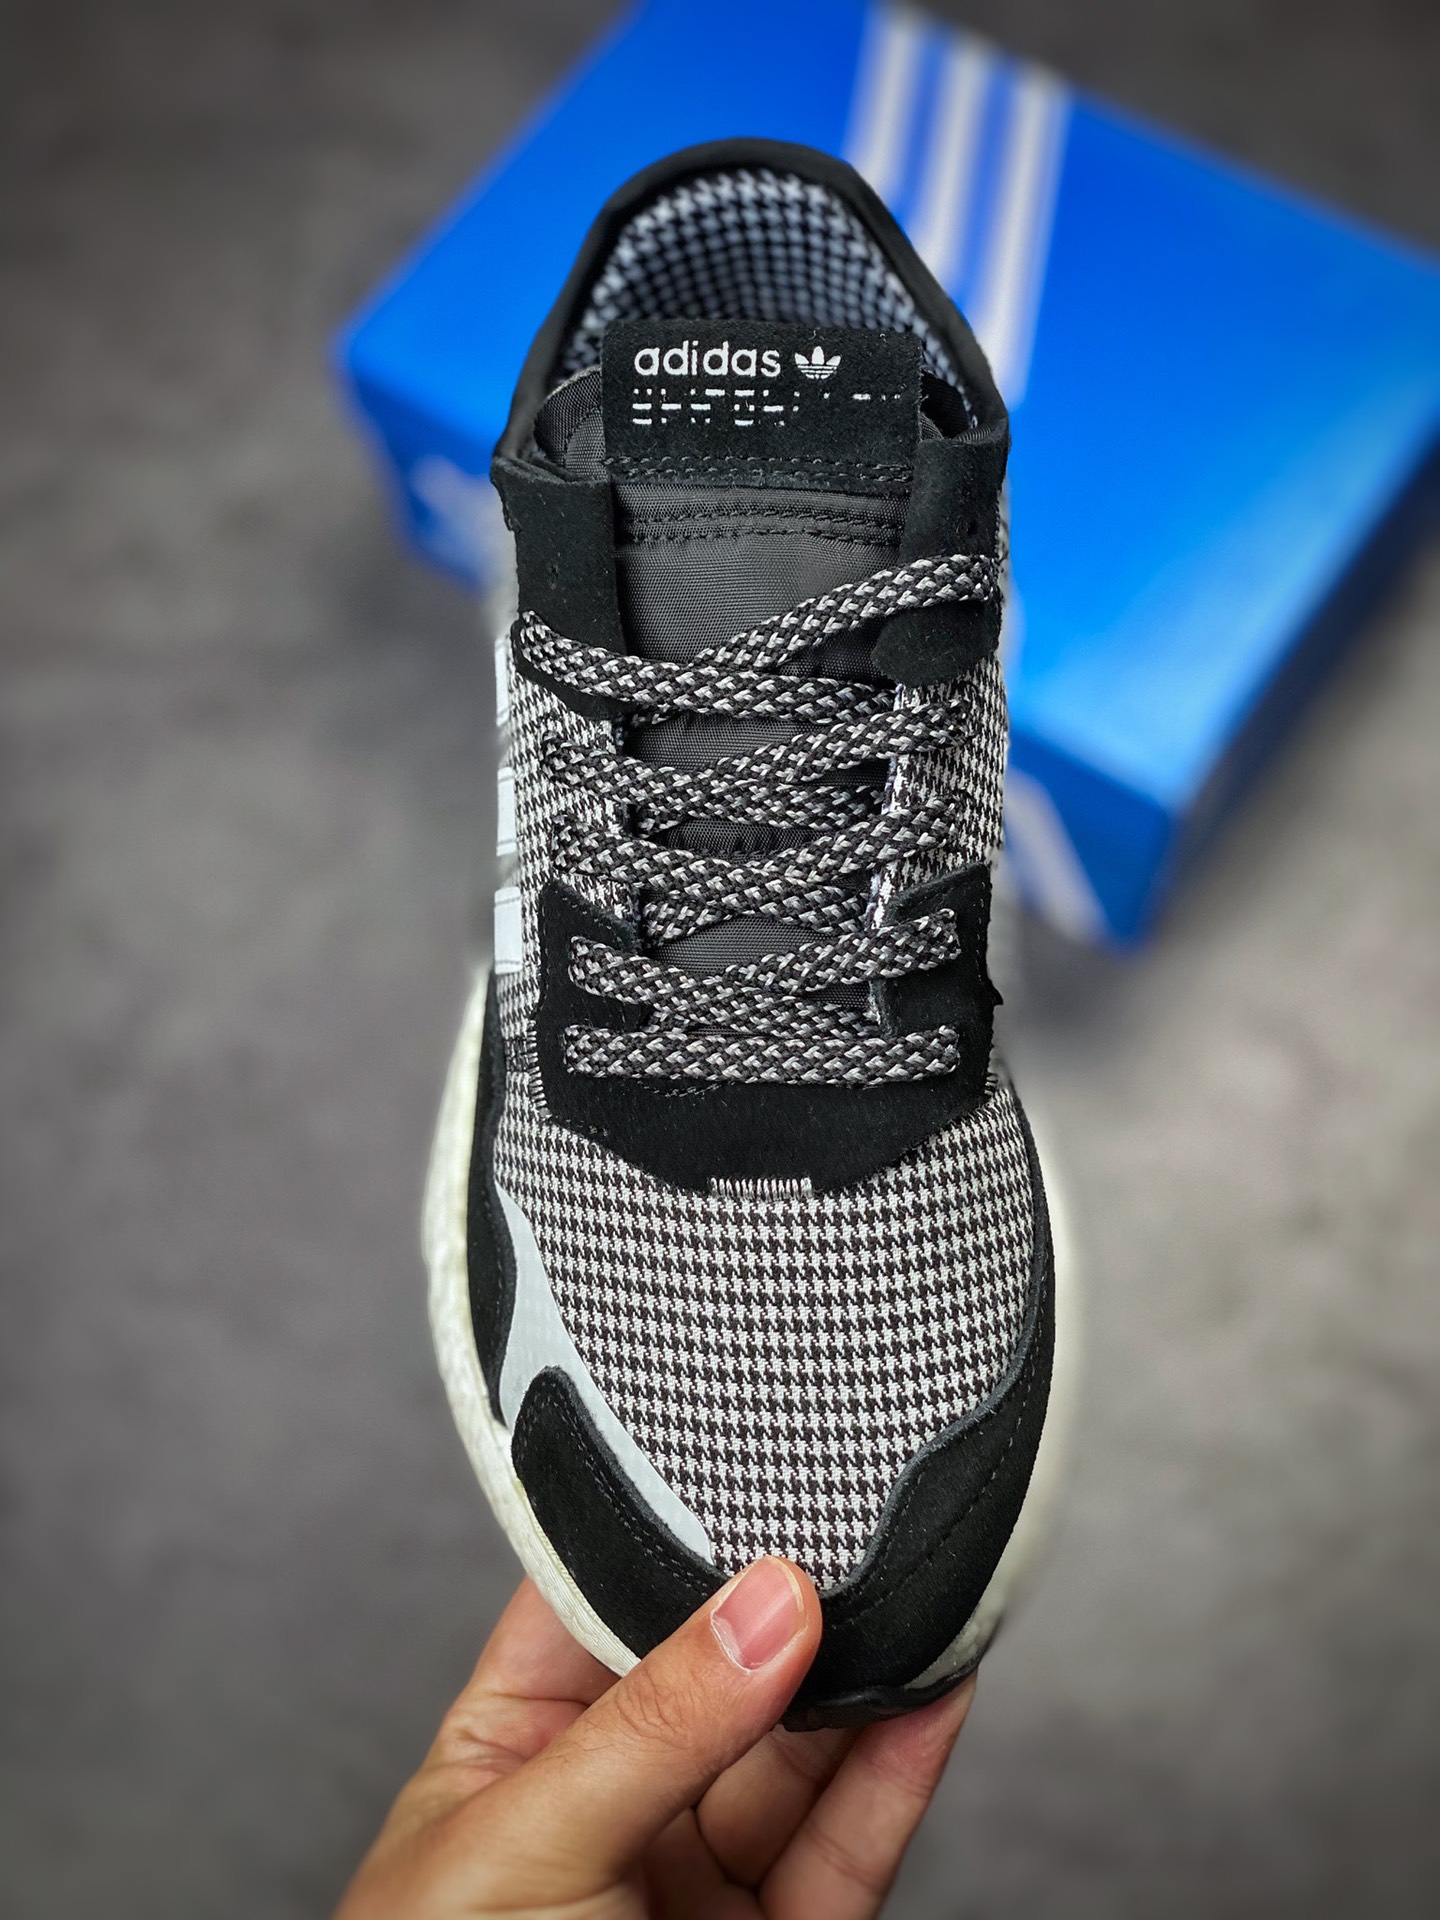 Adidas Nite Jogger 2019 Boost Clover Joint Night Walker FV3854